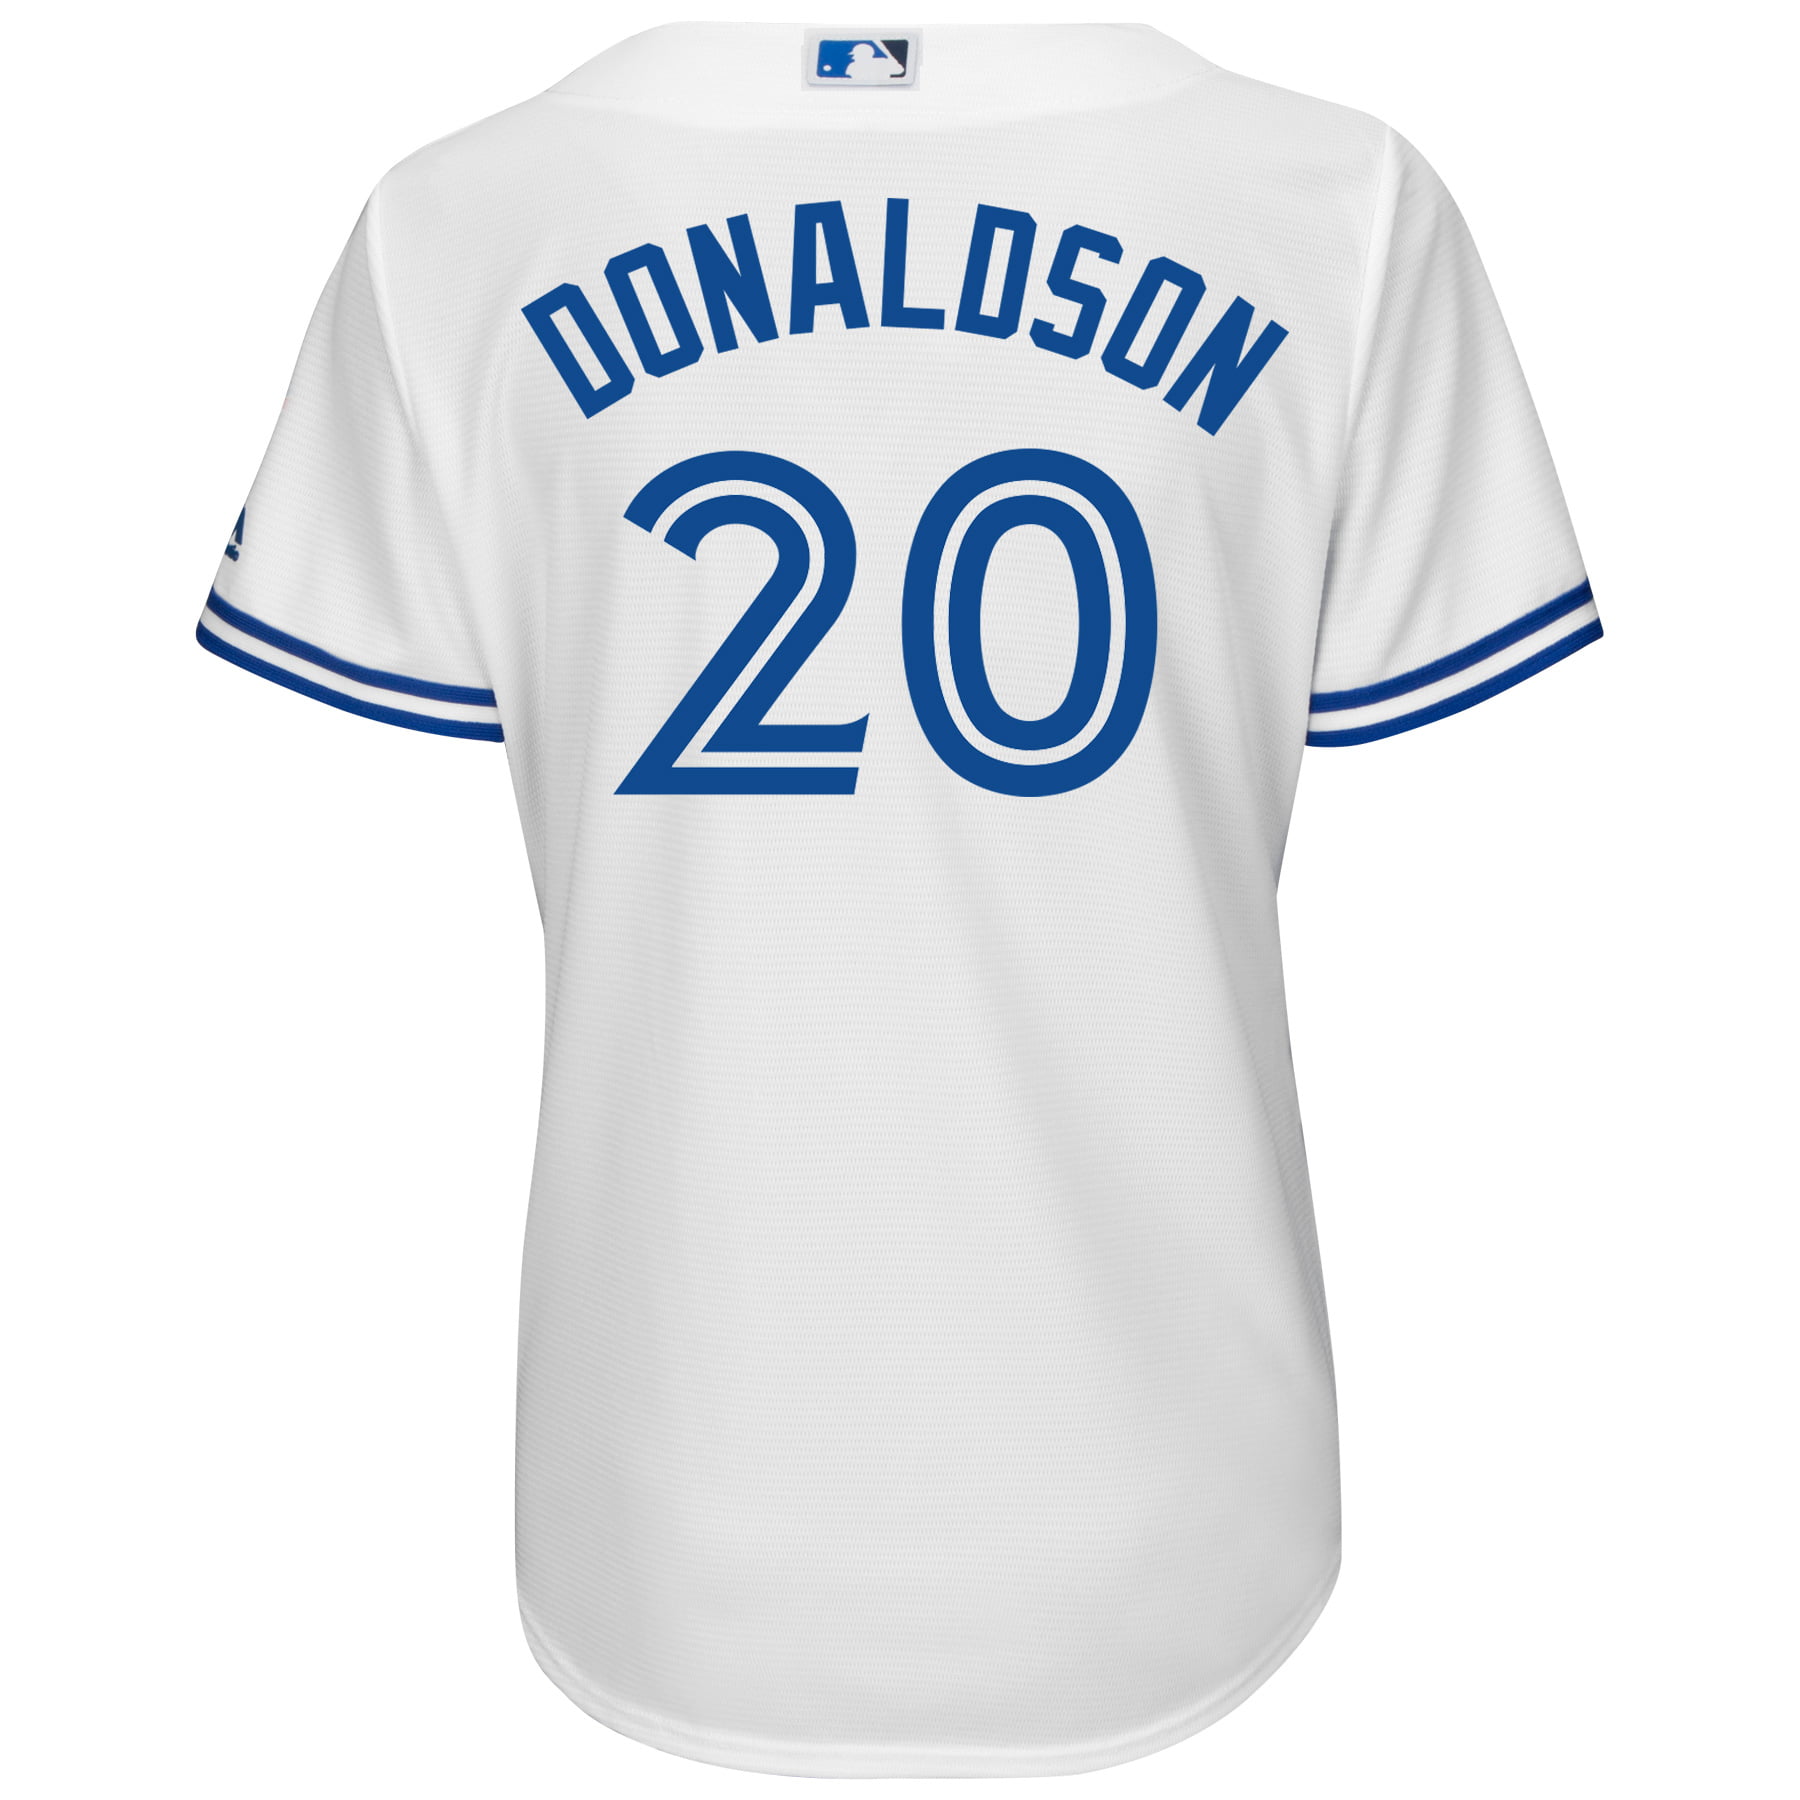 donaldson jersey